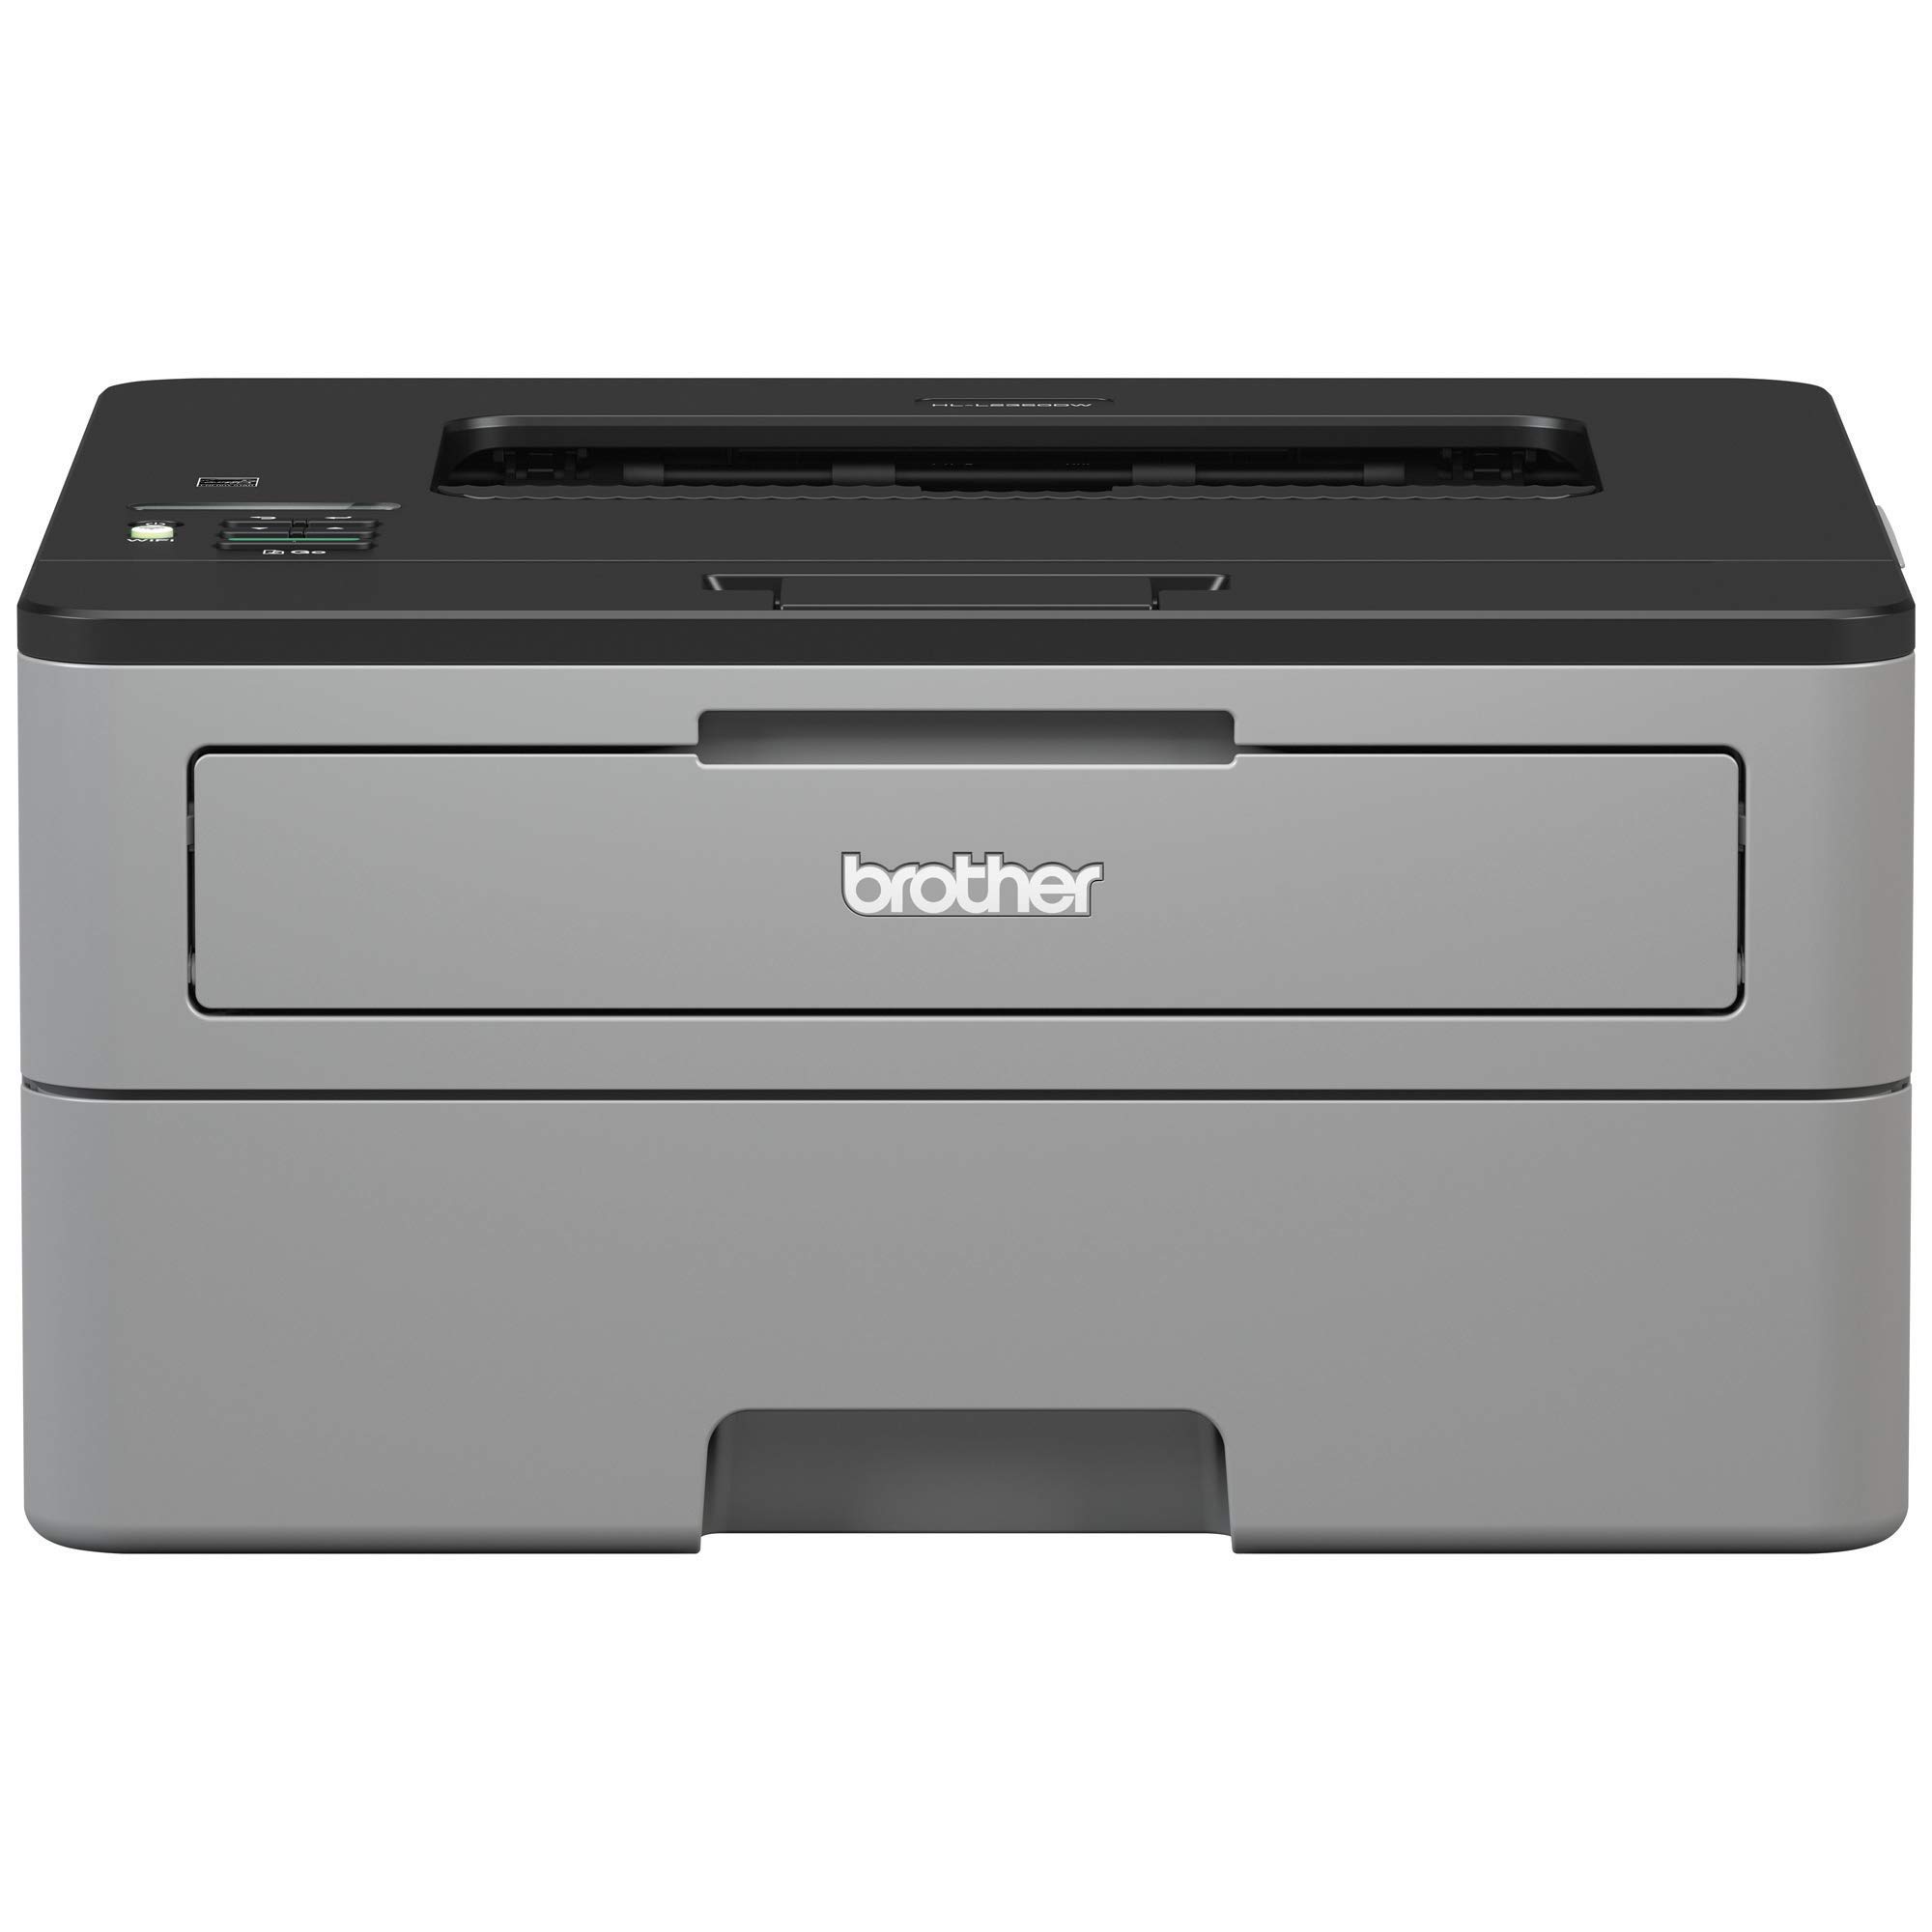 brother HLL2350DW Refurbished Monochrome Printer (Renewed Premium)